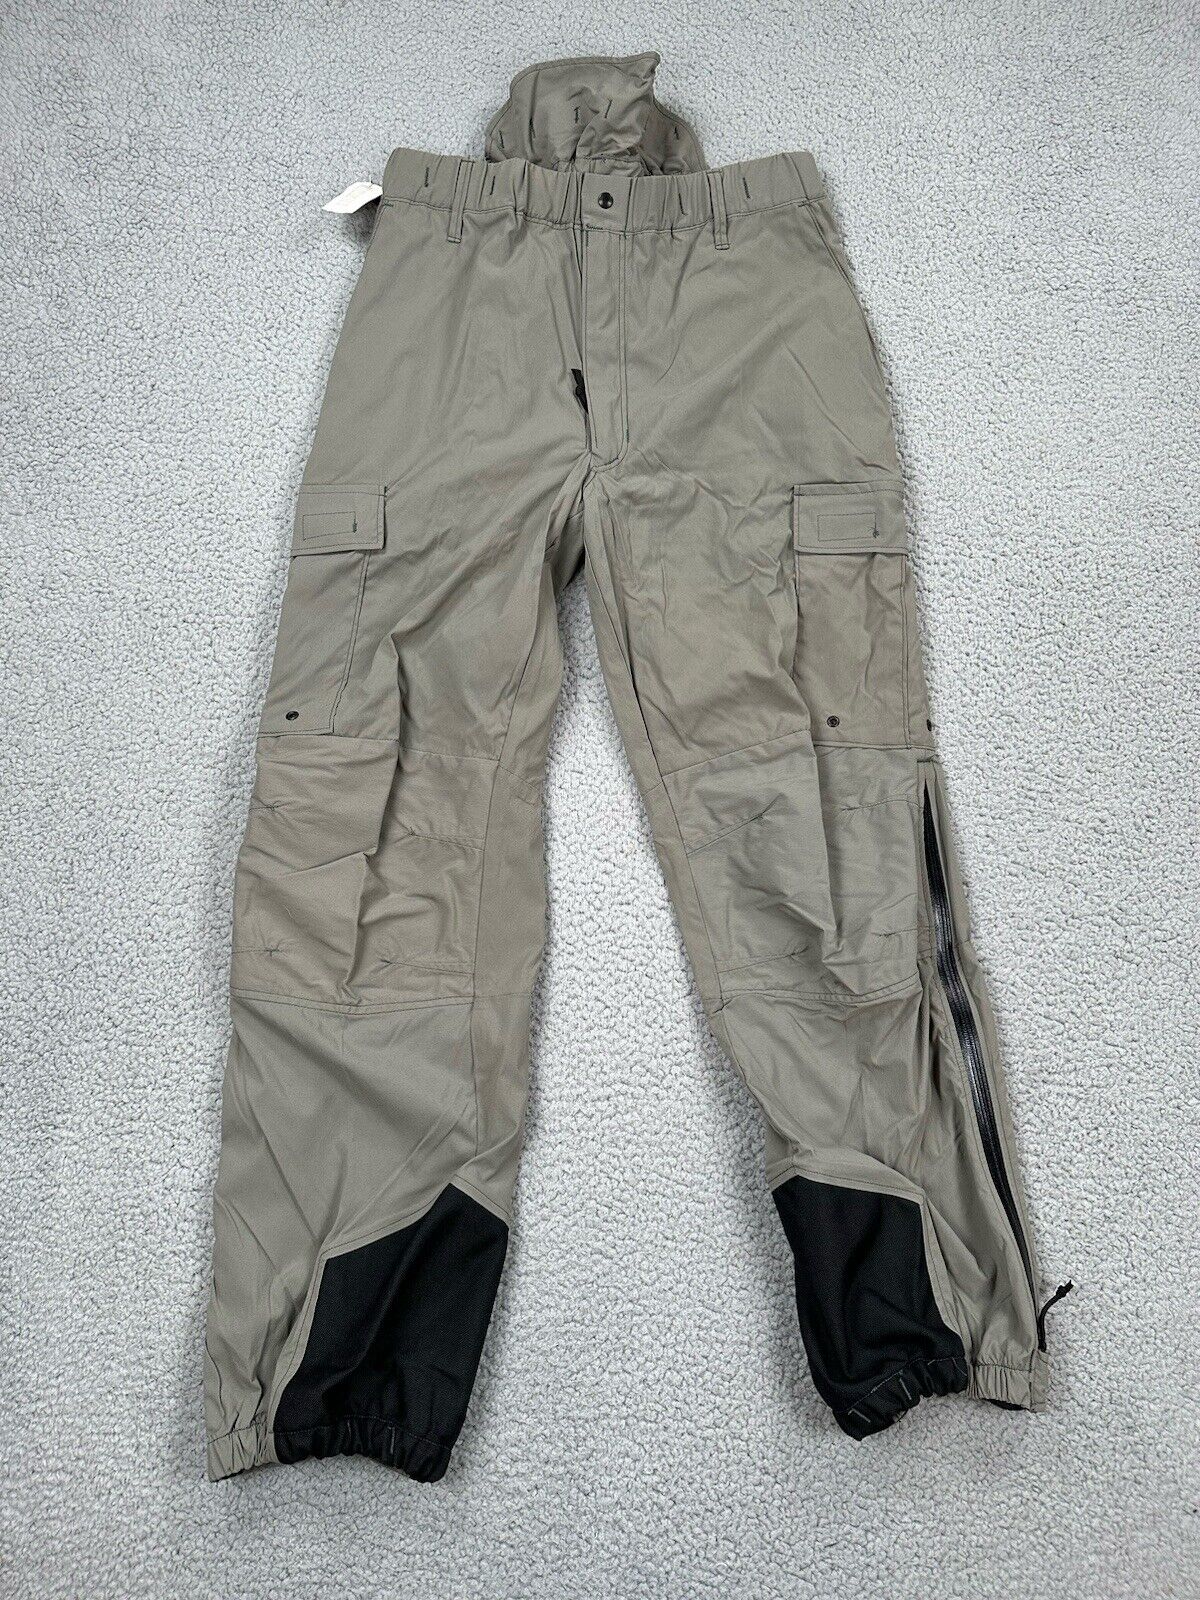 Orc Industries PCU Level 5 Soft Shell Pants Men's Size XL Nylon Military